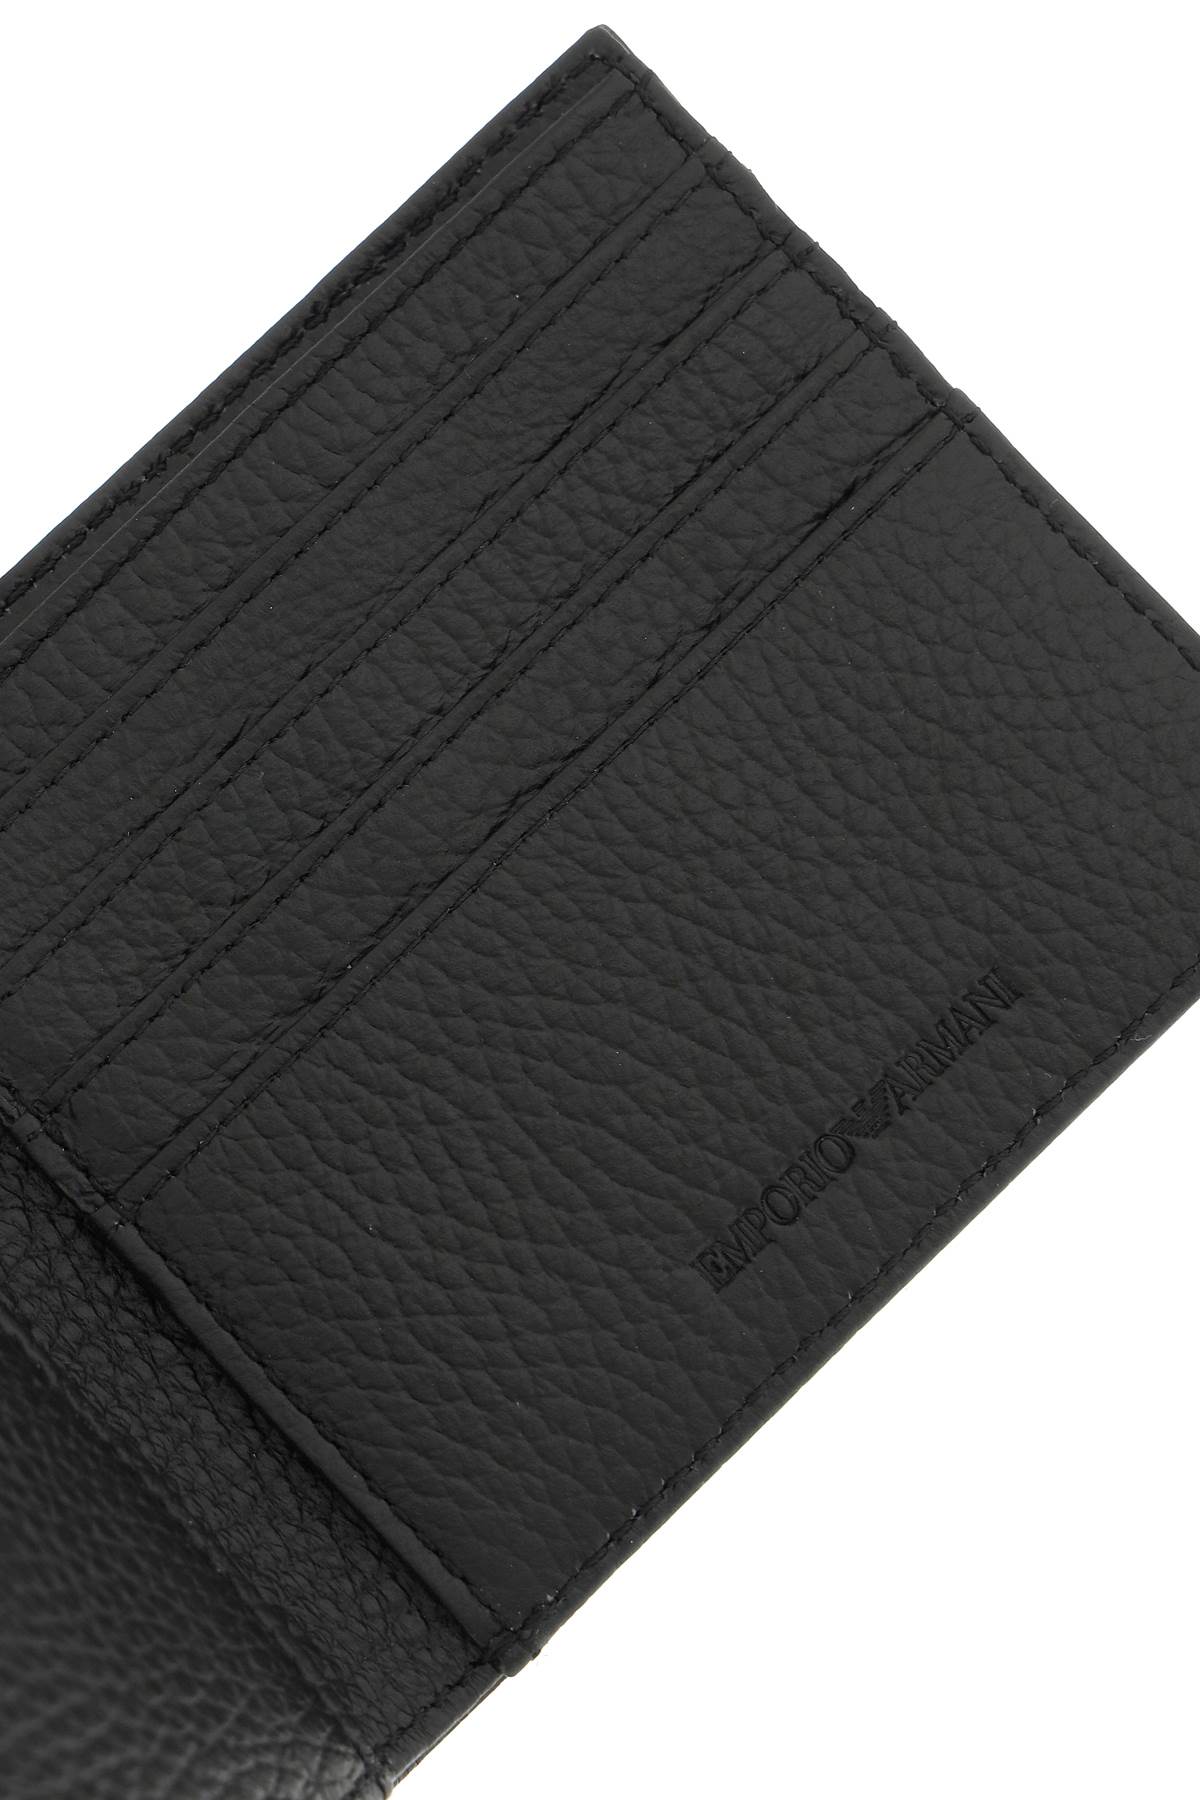 Shop Emporio Armani Grained Leather Wallet In Black